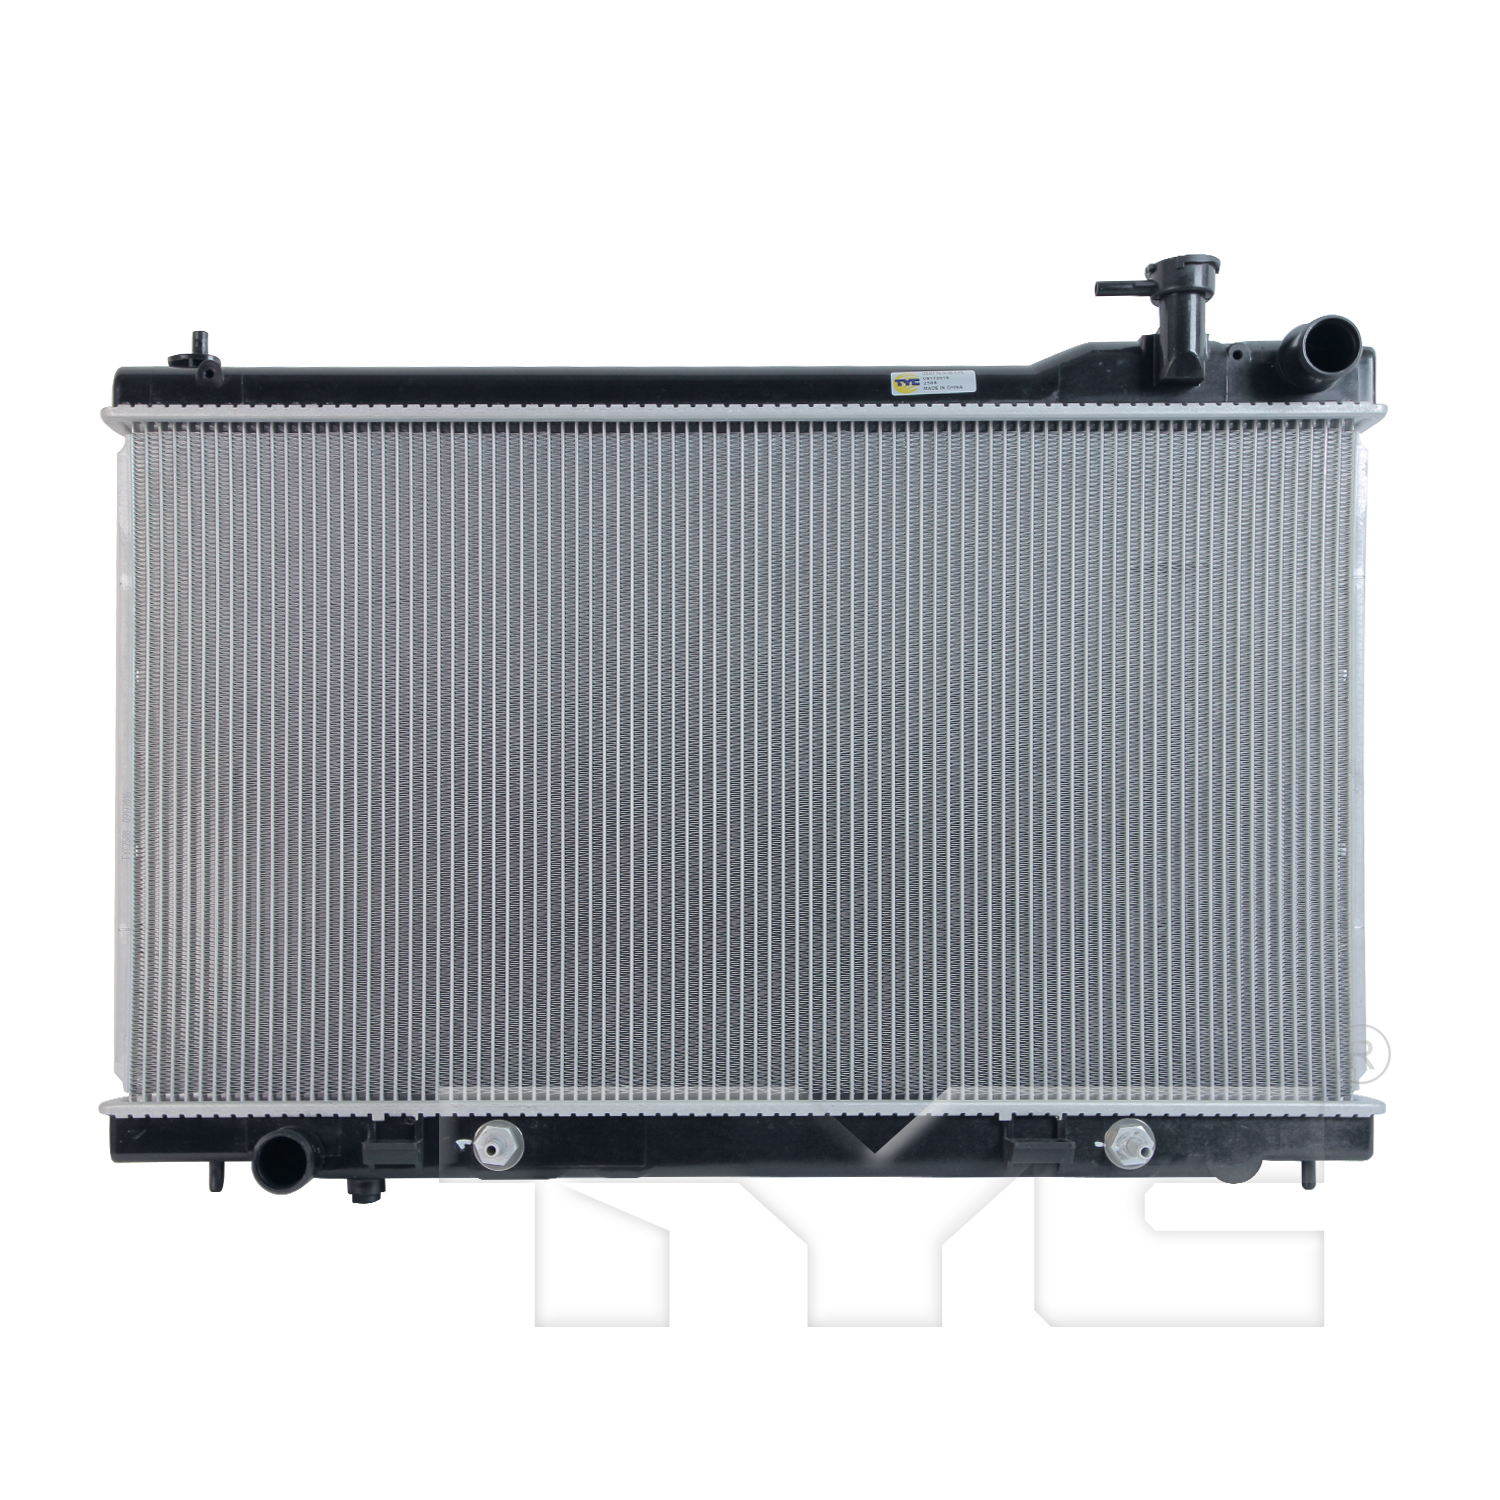 Aftermarket RADIATORS for INFINITI - G35, G35,03-07,Radiator assembly